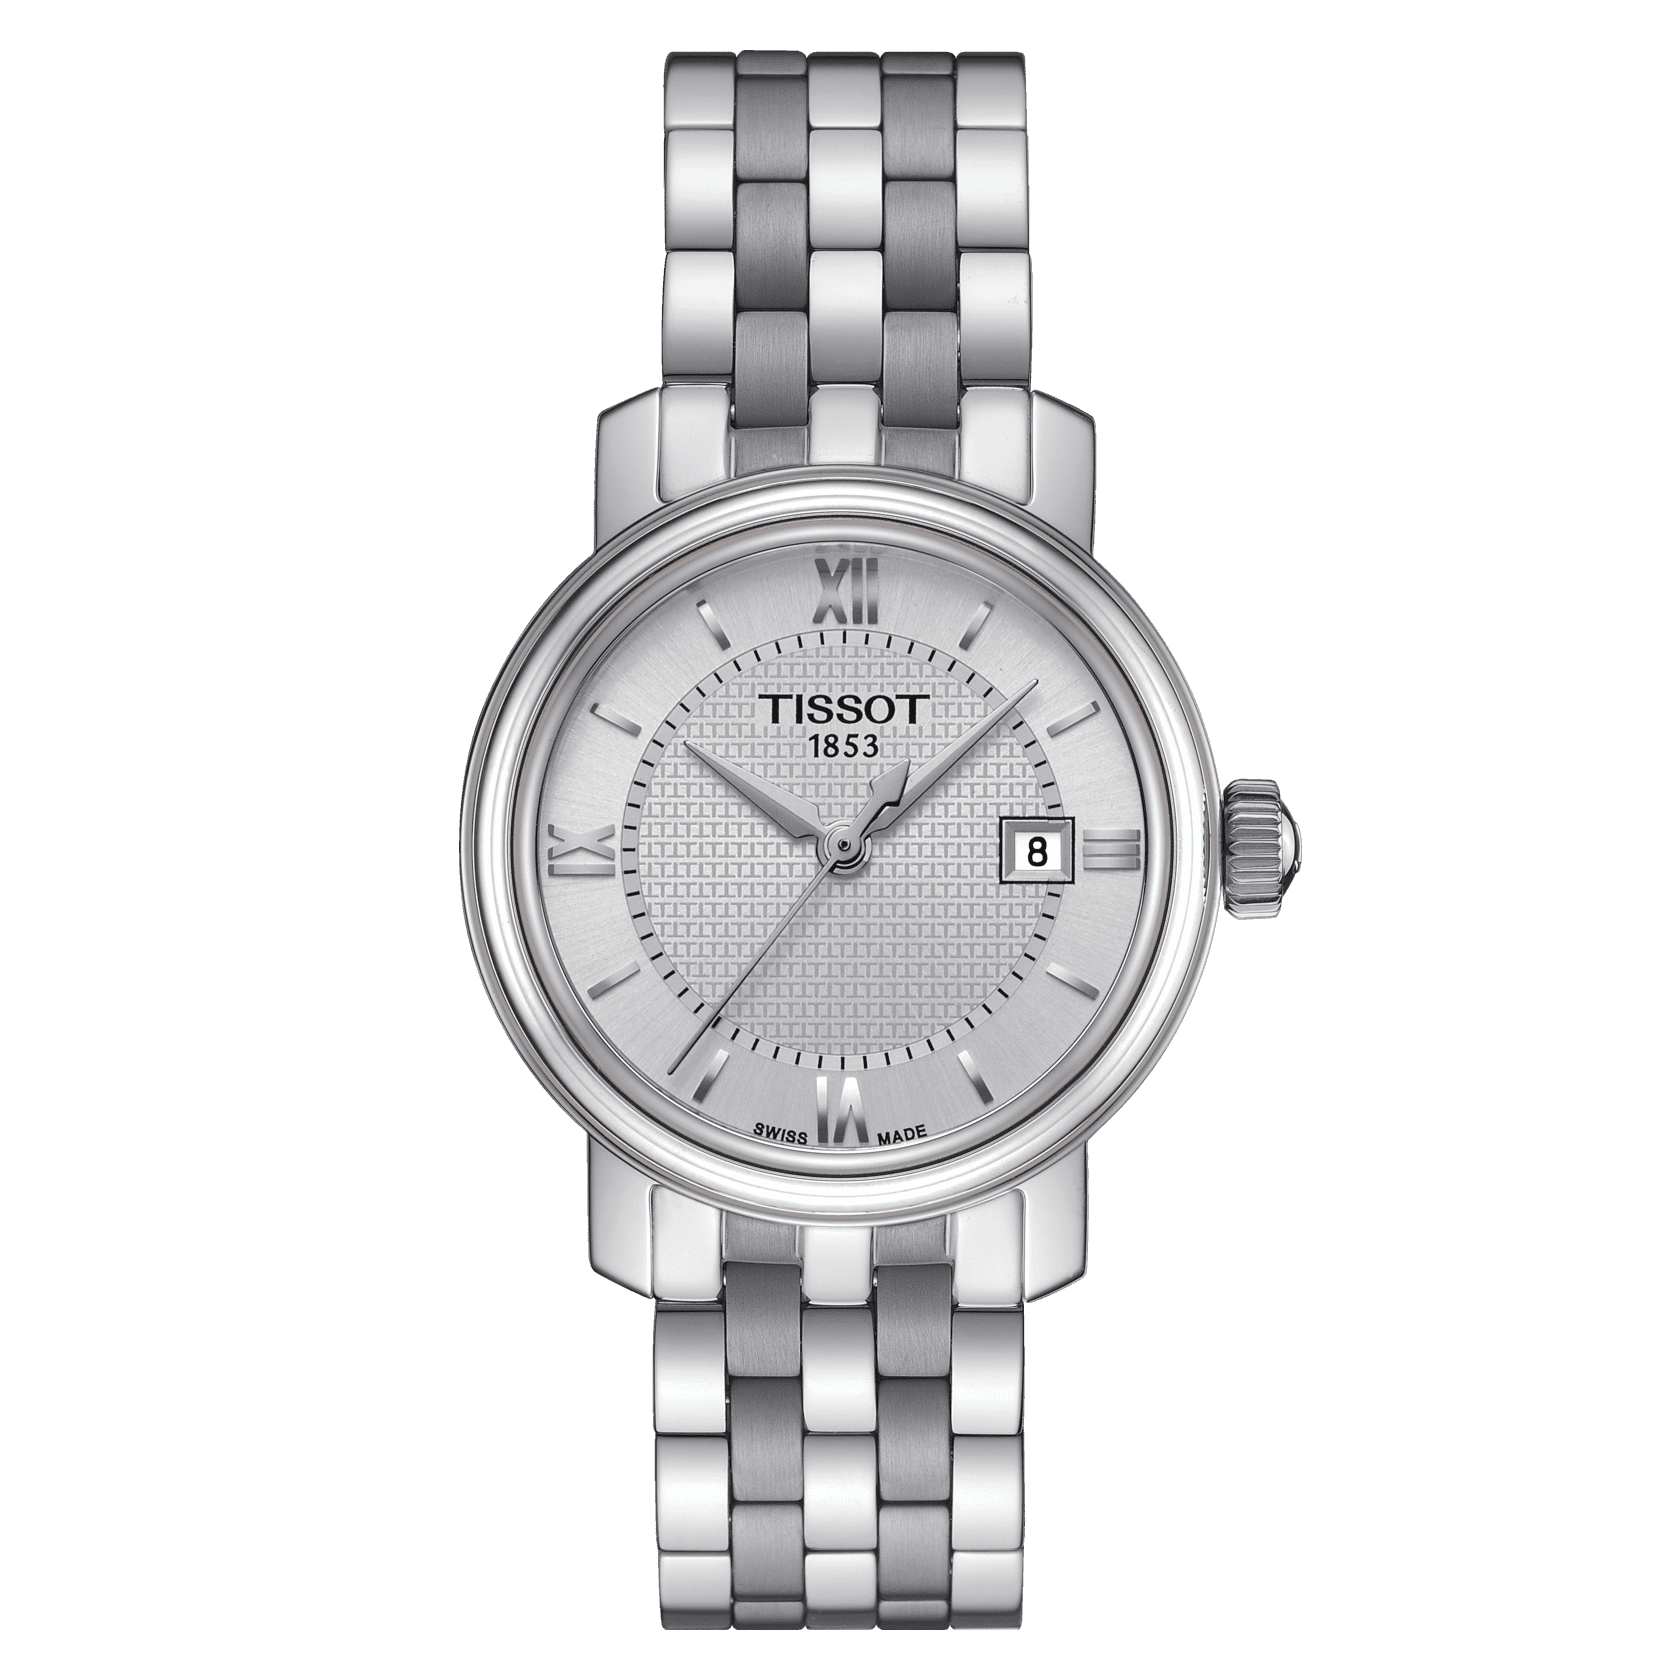 Fake Cartier Watch With Diamonds